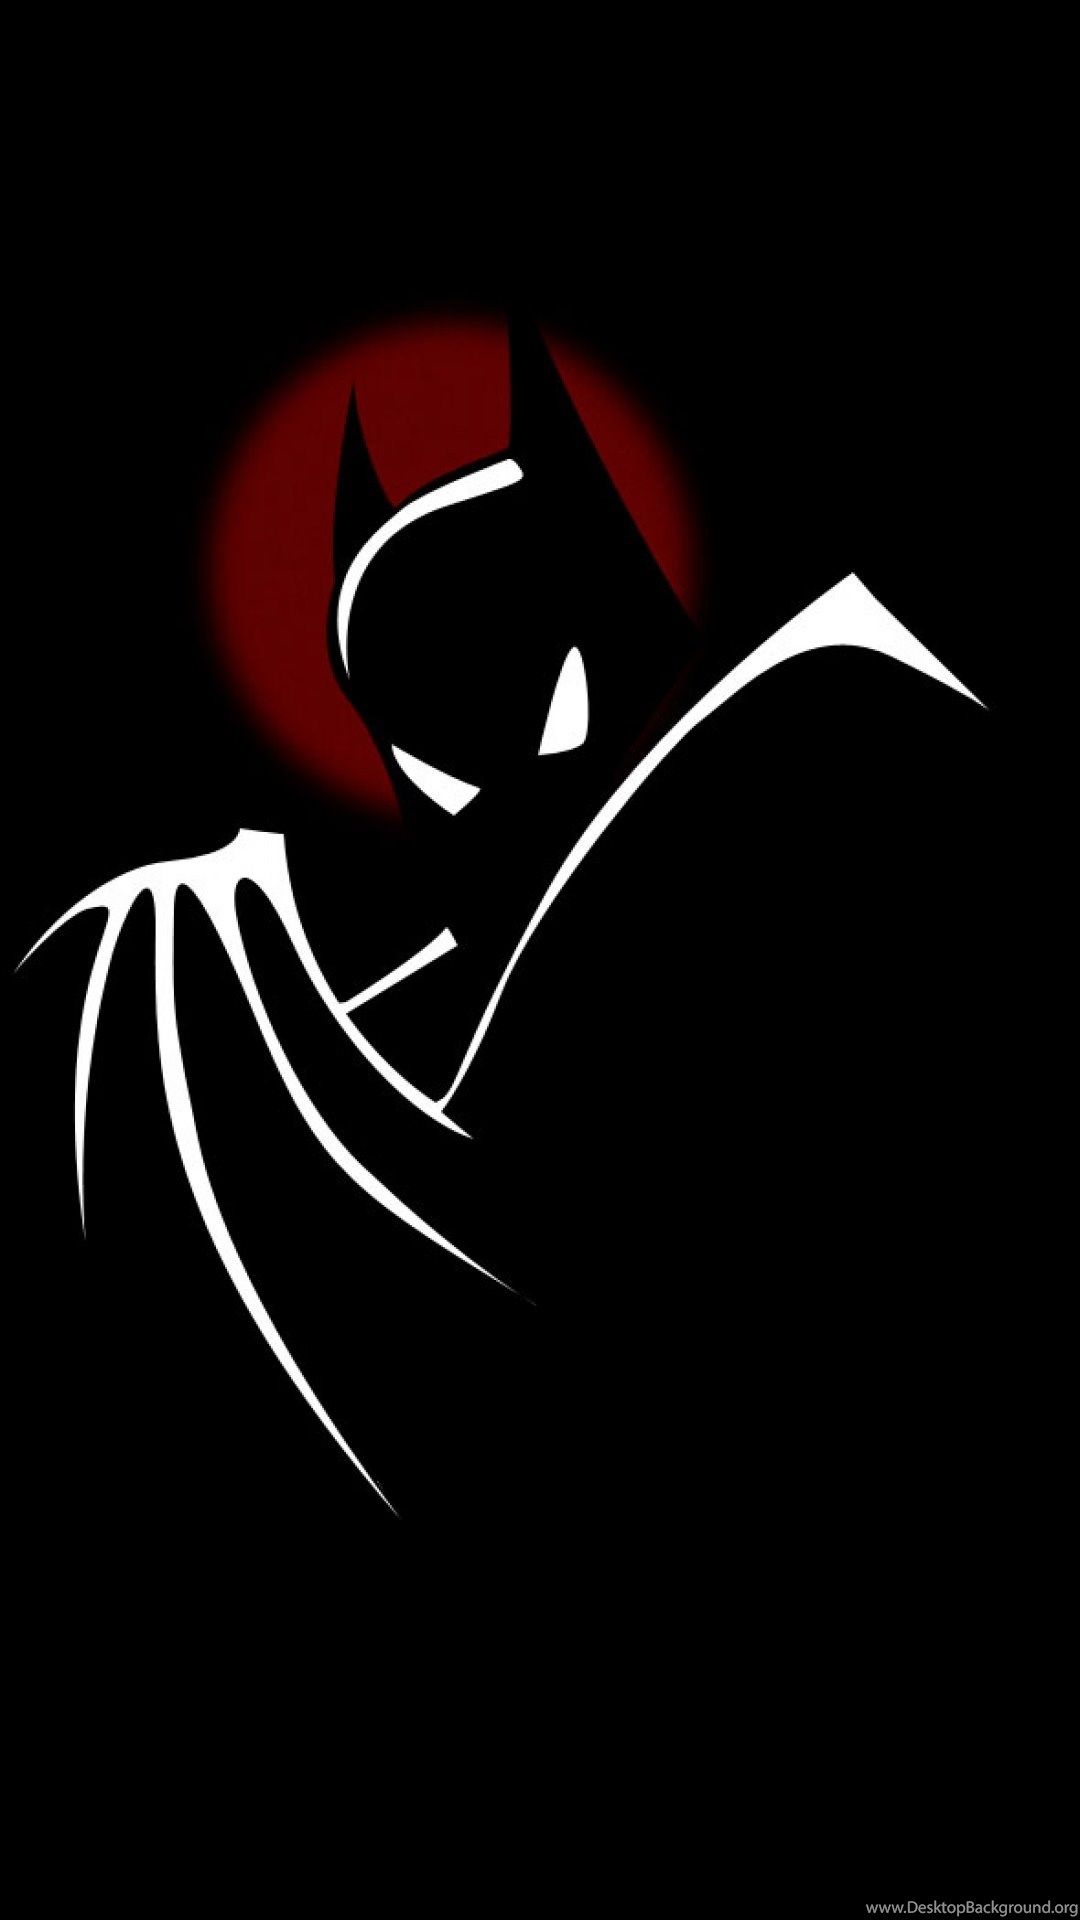 Batman Mobile Phone Wallpaper Desktop Background